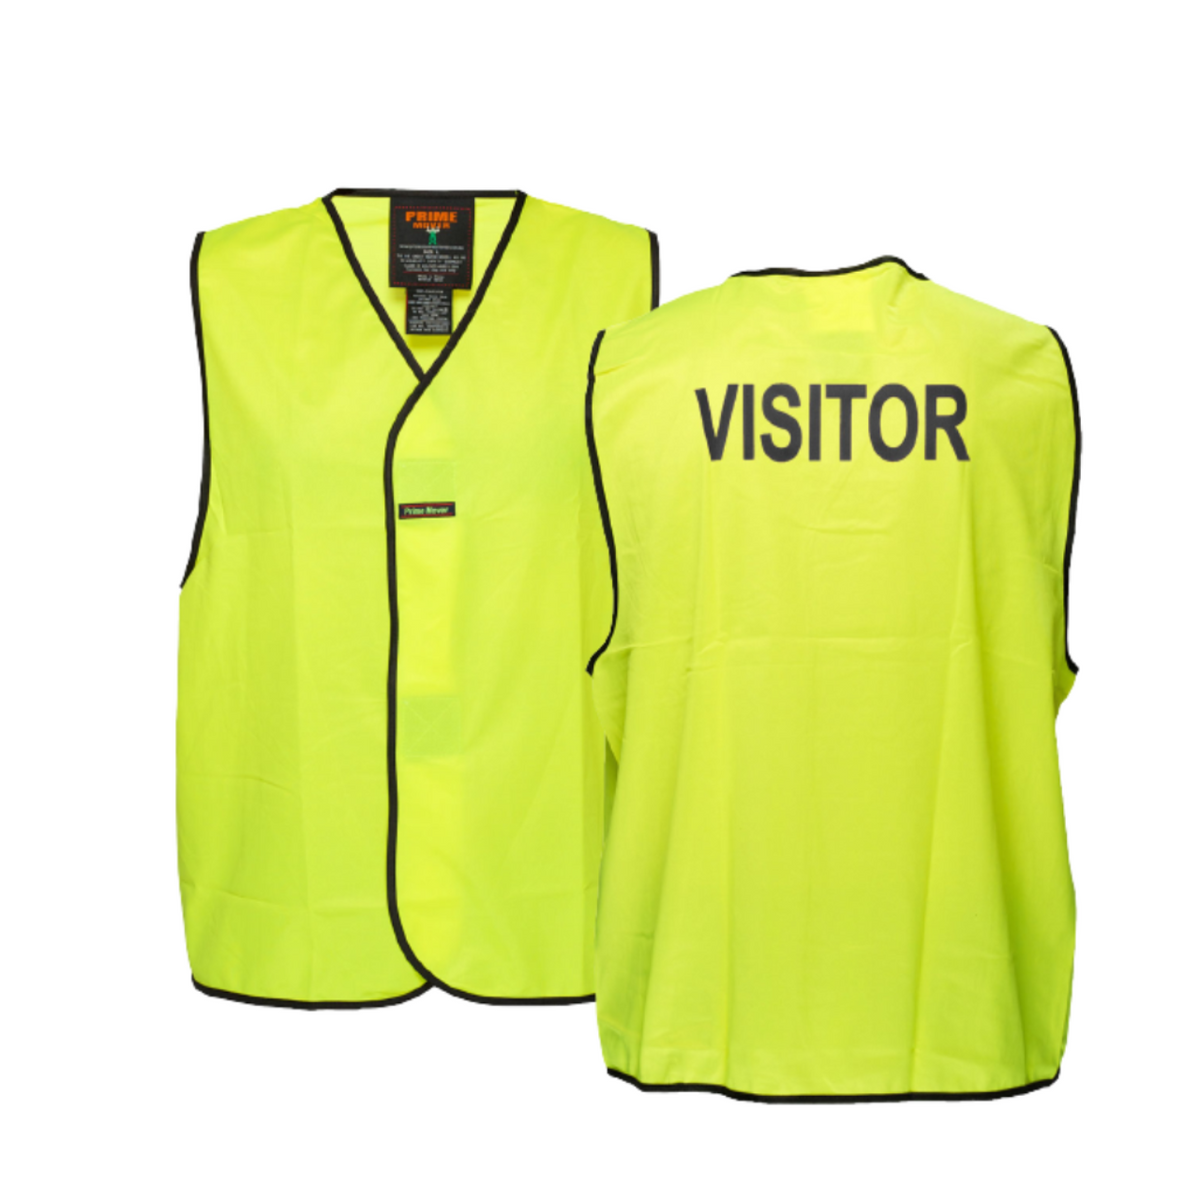 Portwest Visitor Hi-Vis Vest Class D Lightweight Touch Tape Work Safety MV120-Collins Clothing Co